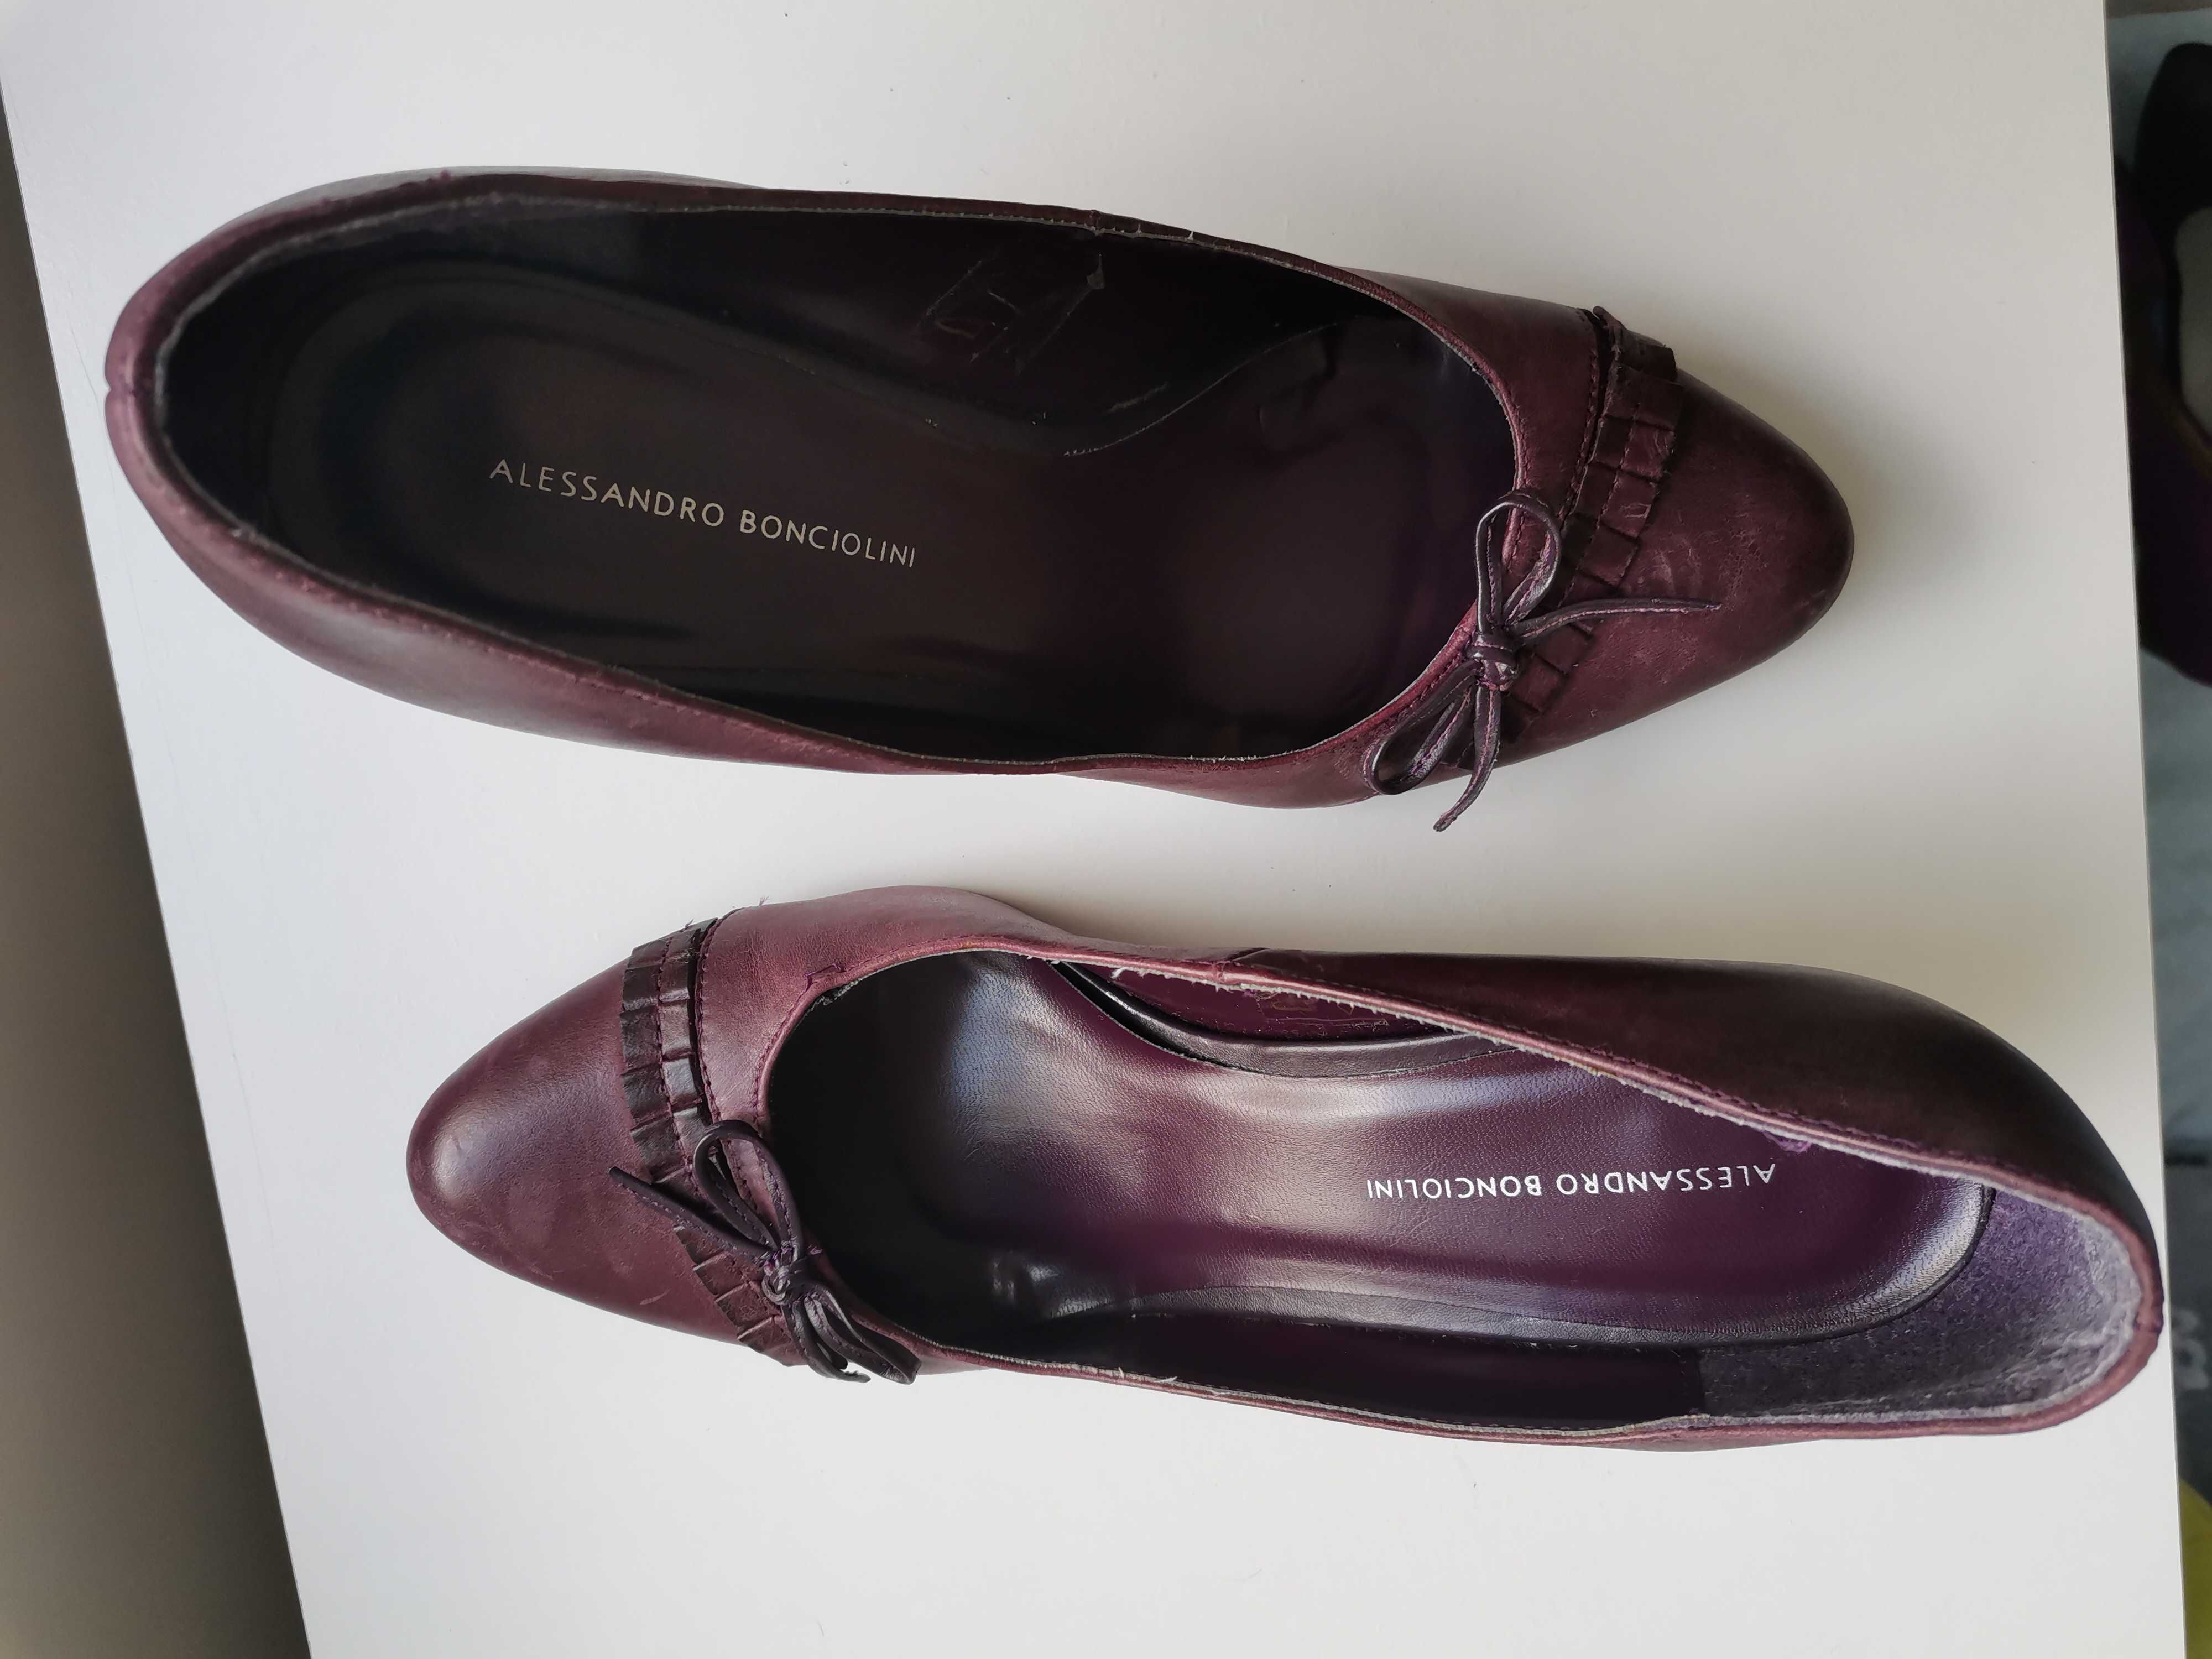 Pantofi Alessandro Bonciolini 37, piele naturala, mov pruna